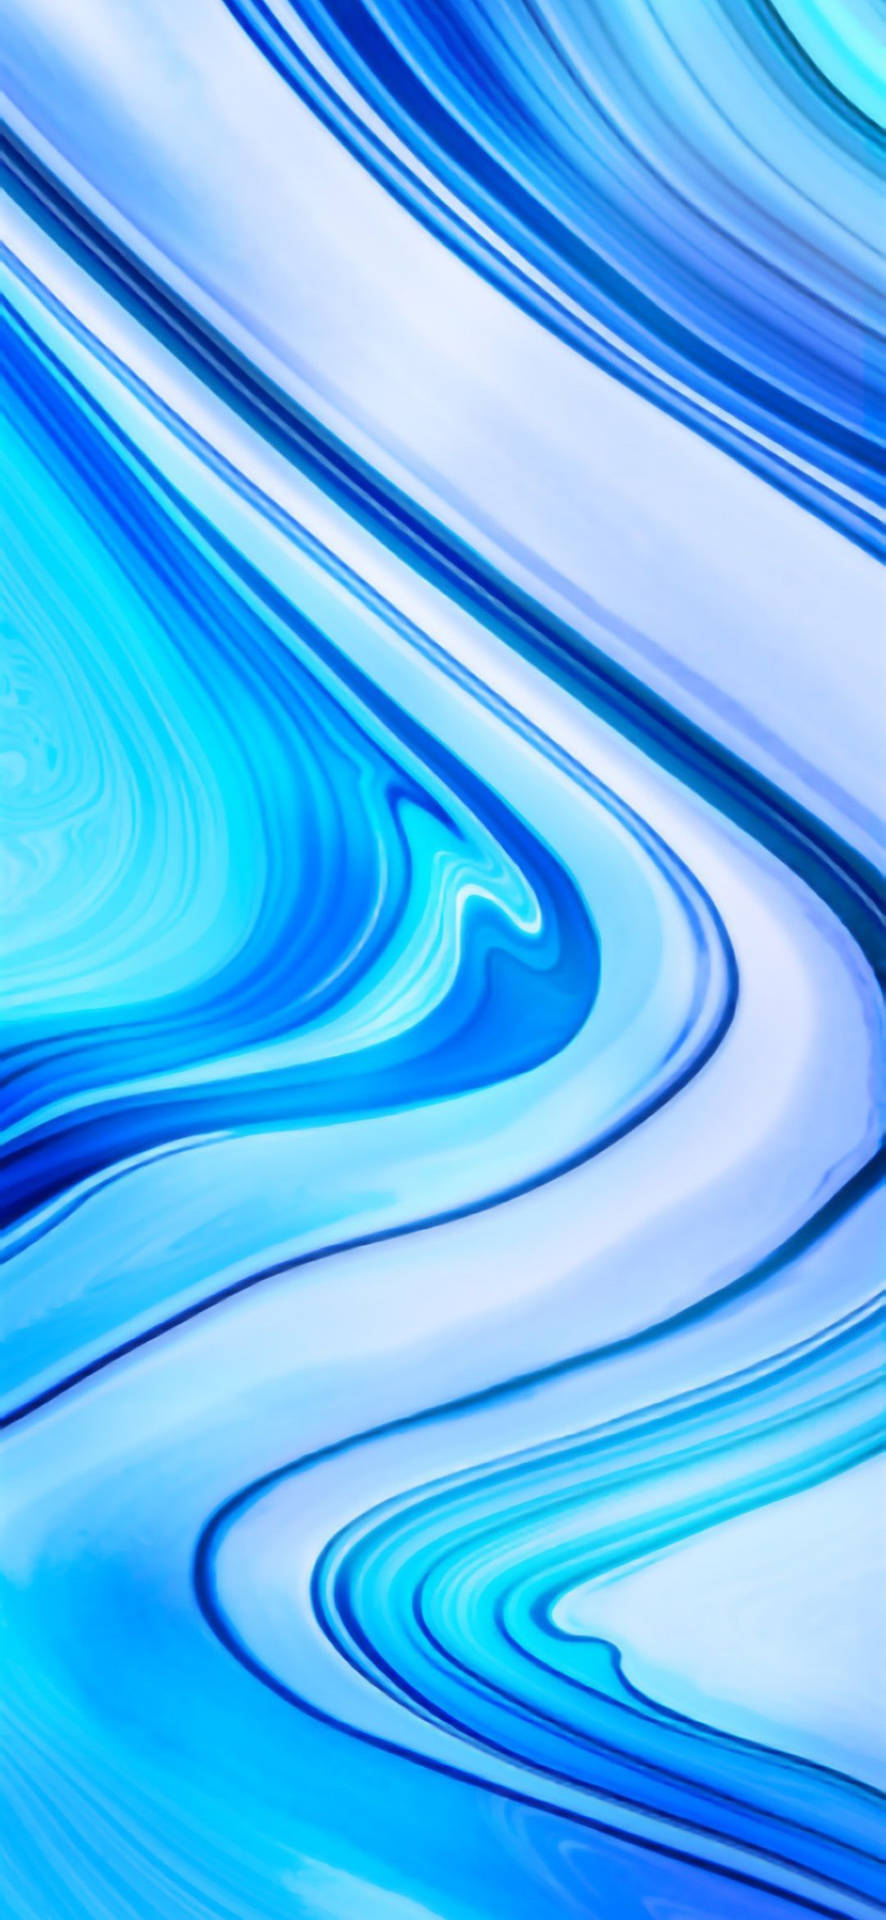 Elegant Redmi 9 Showcased In Shades Of Blue Background